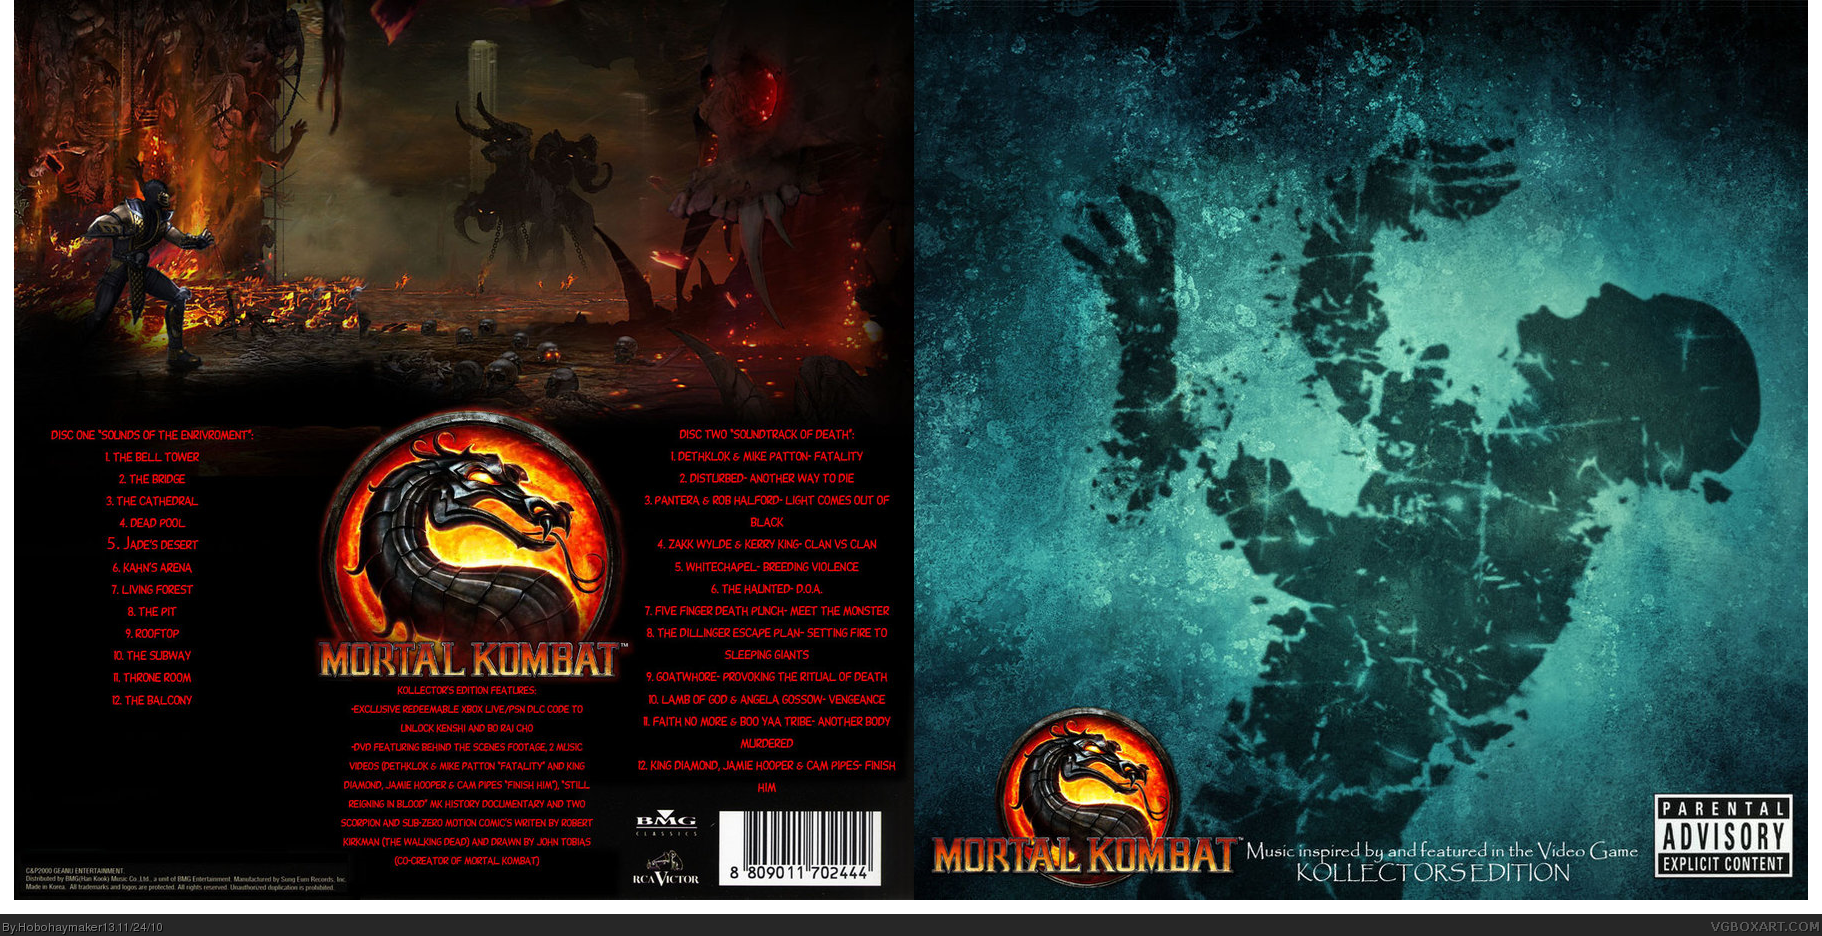 Mortal Kombat 2011 Soundtrack Kollector's Edition box cover